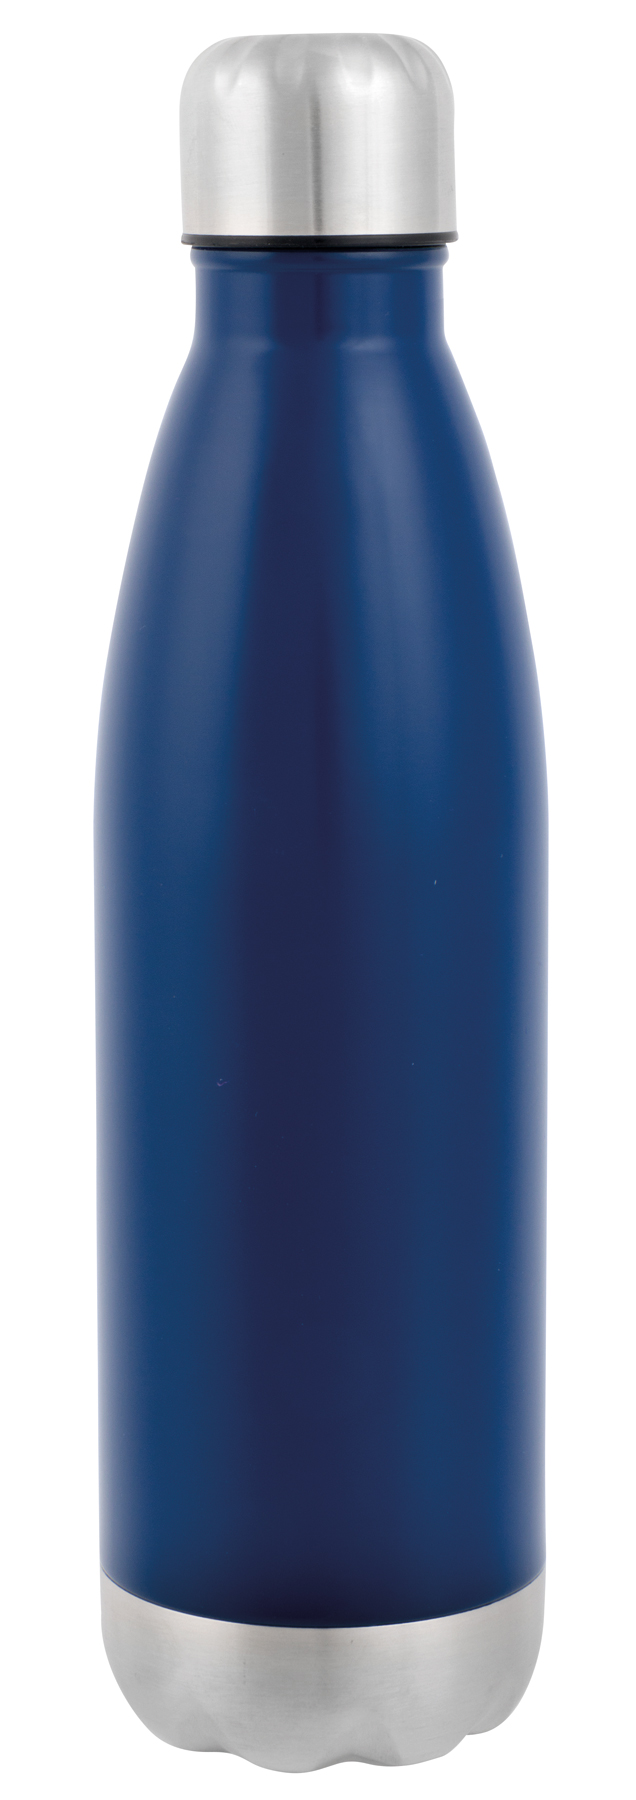 Double-walled vacuum bottle GOLDEN TASTE - blue